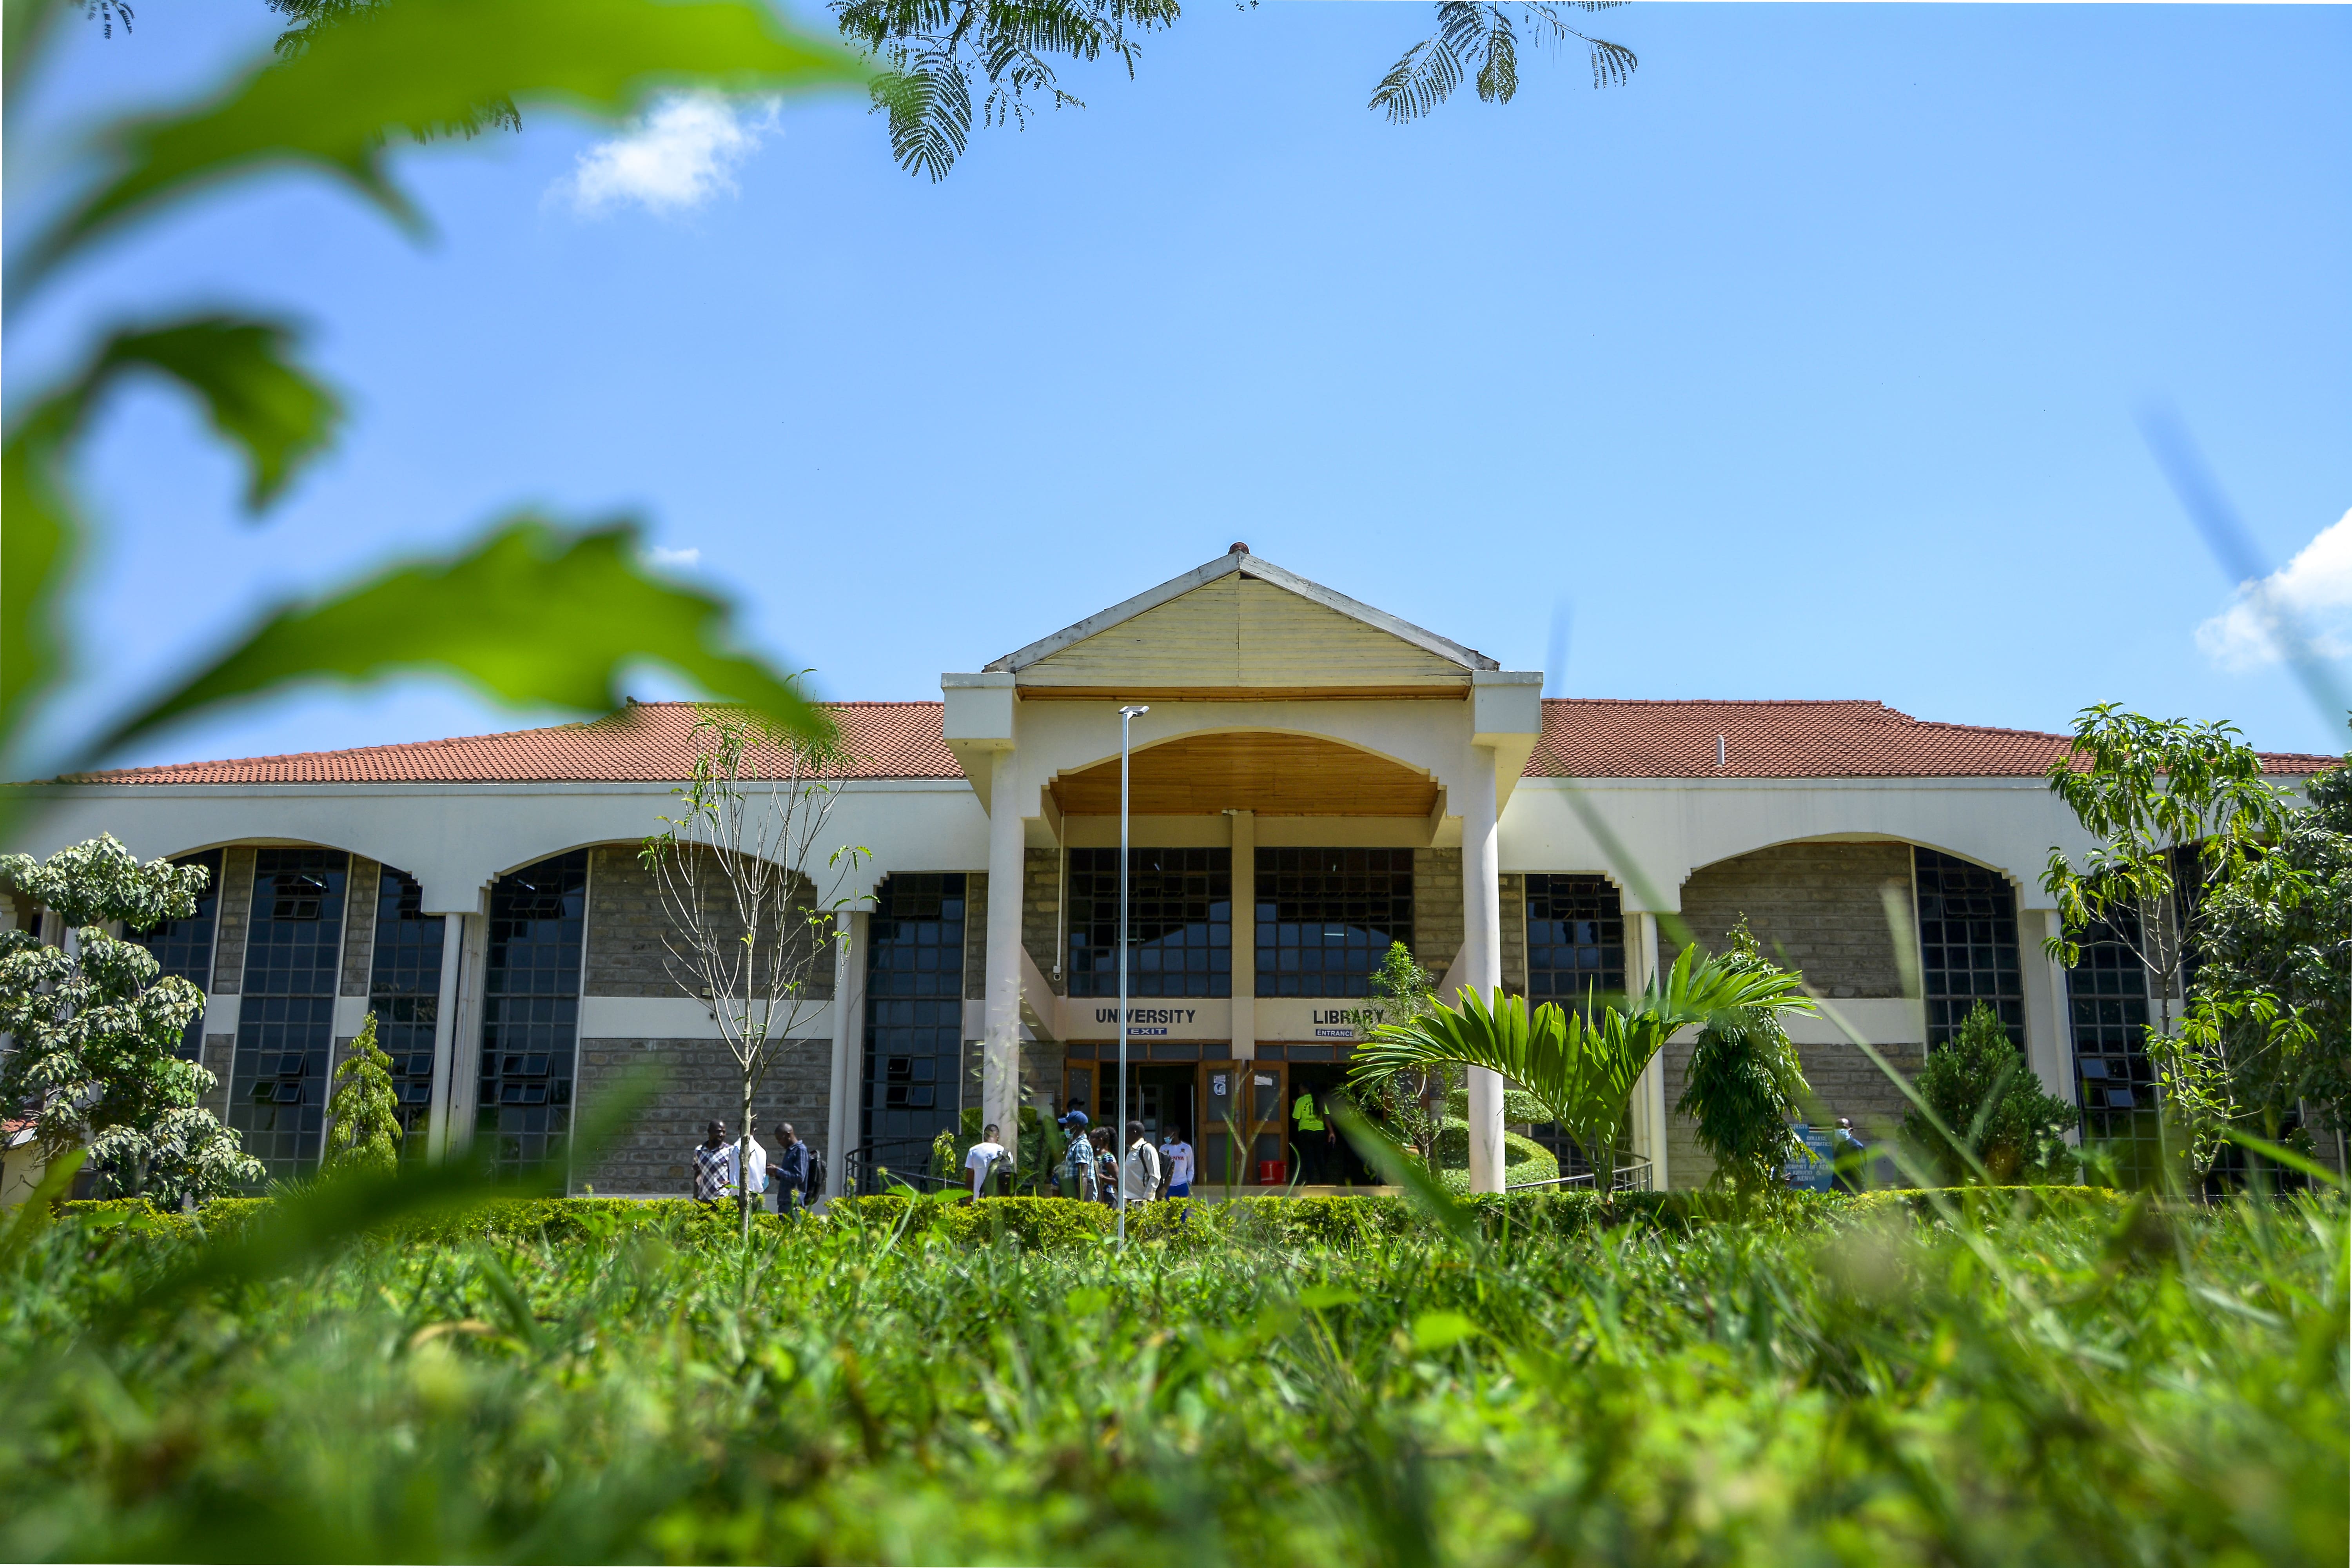 Kibabii University